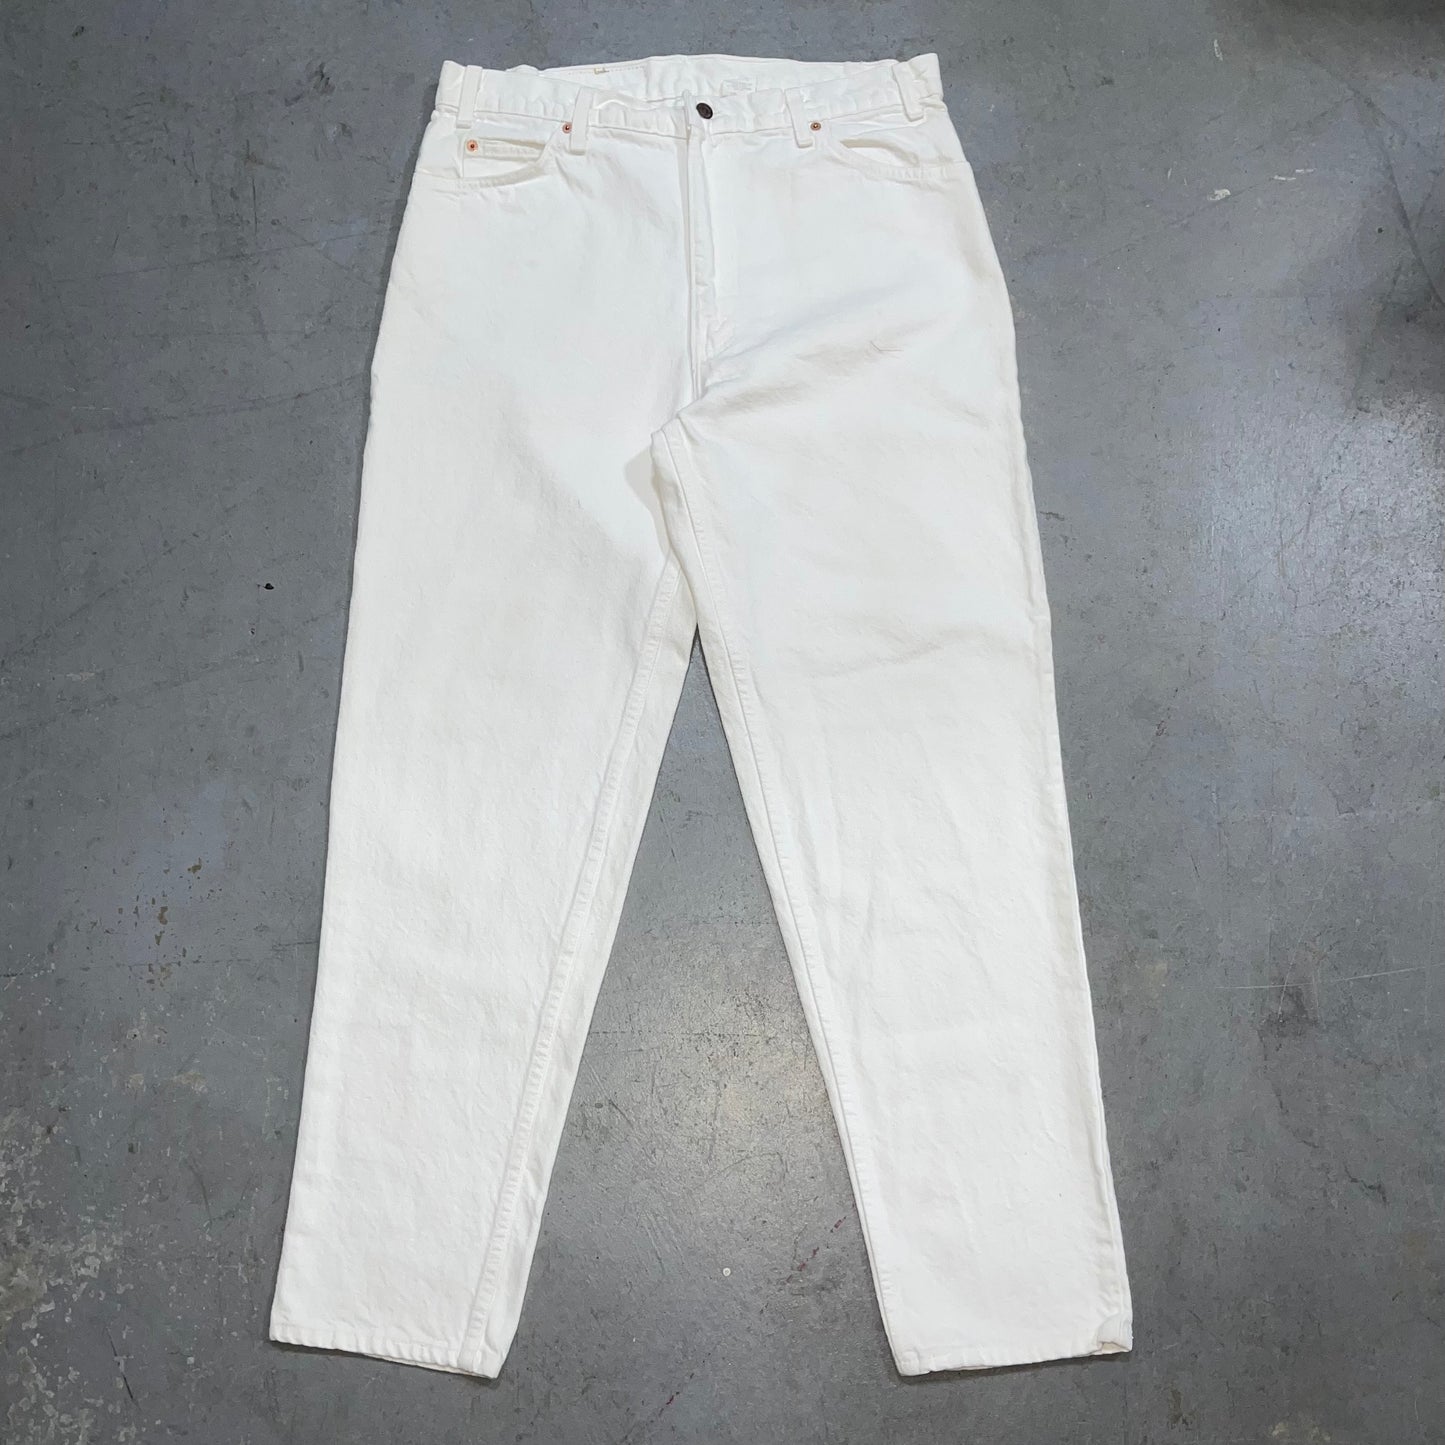 Vintage 90’s Levi’s 550 Orange Tab Jeans. Size 38 x 32